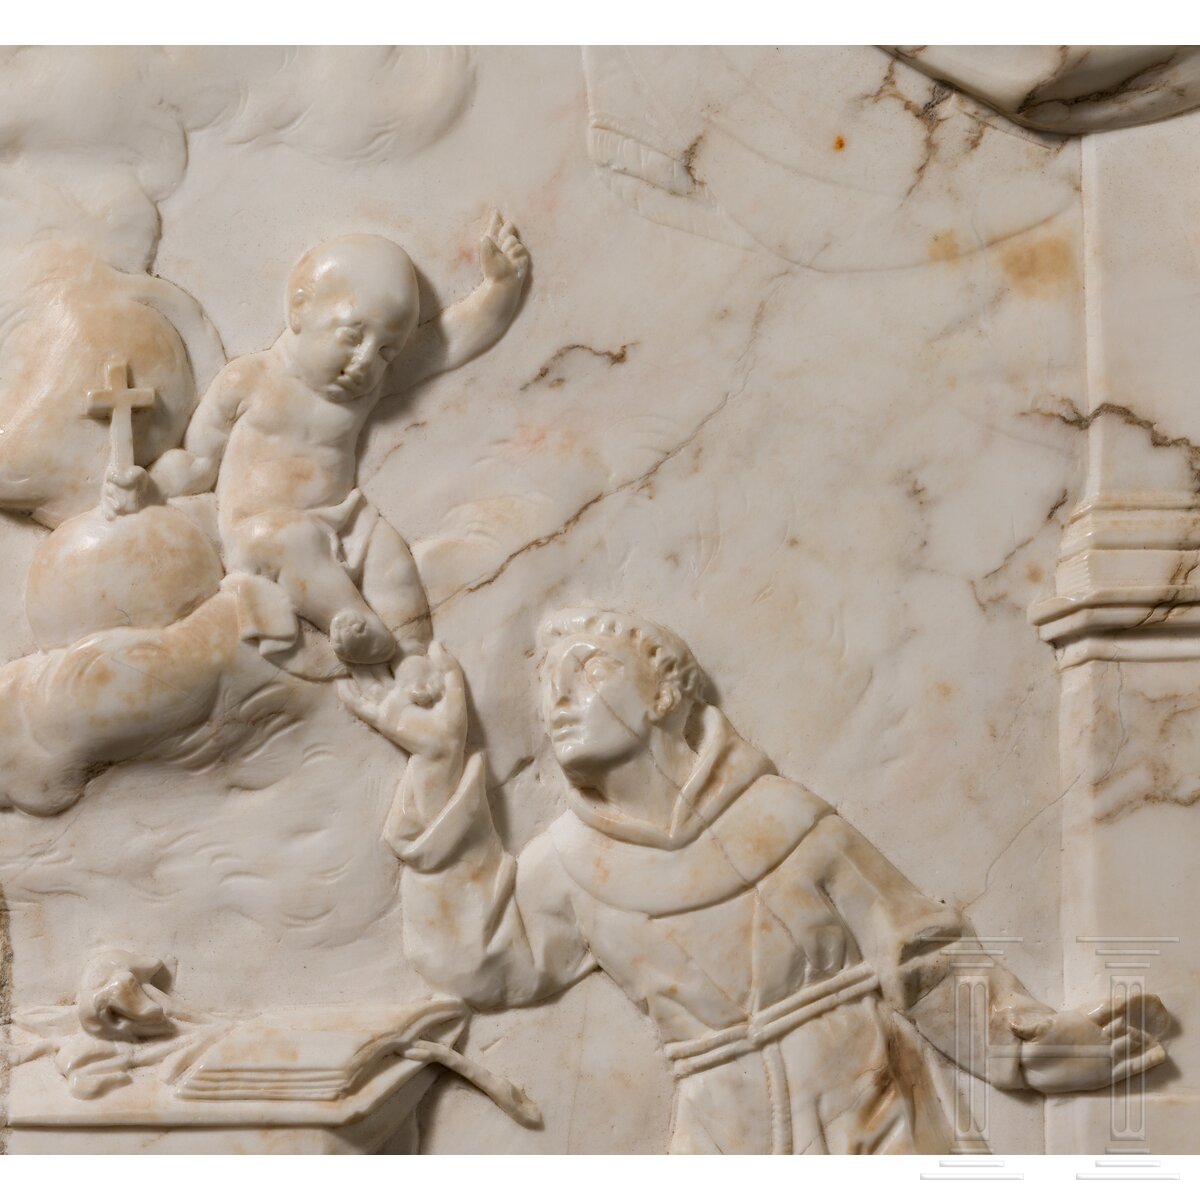 Sehr feines Marmor-Relief mit Hl. Antonius von Padua, Italien, spätes 17. Jhdt. - Bild 3 aus 3